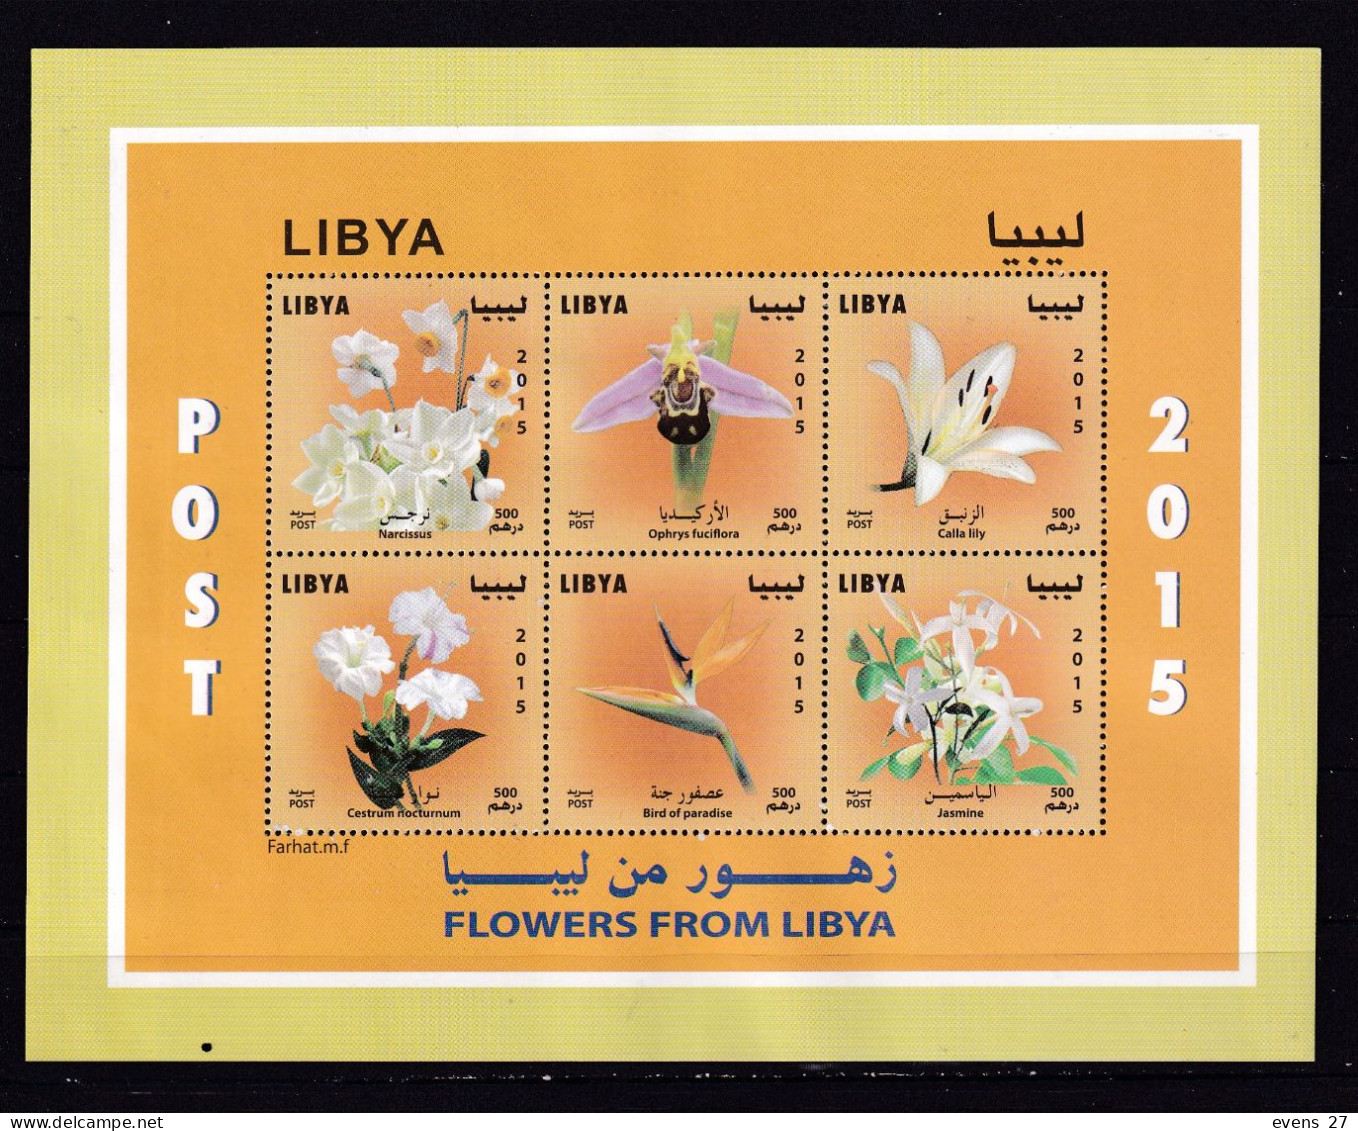 LIBYA-2015-FLOWERS FROM LIBYA-SHEET -MNH - Libia